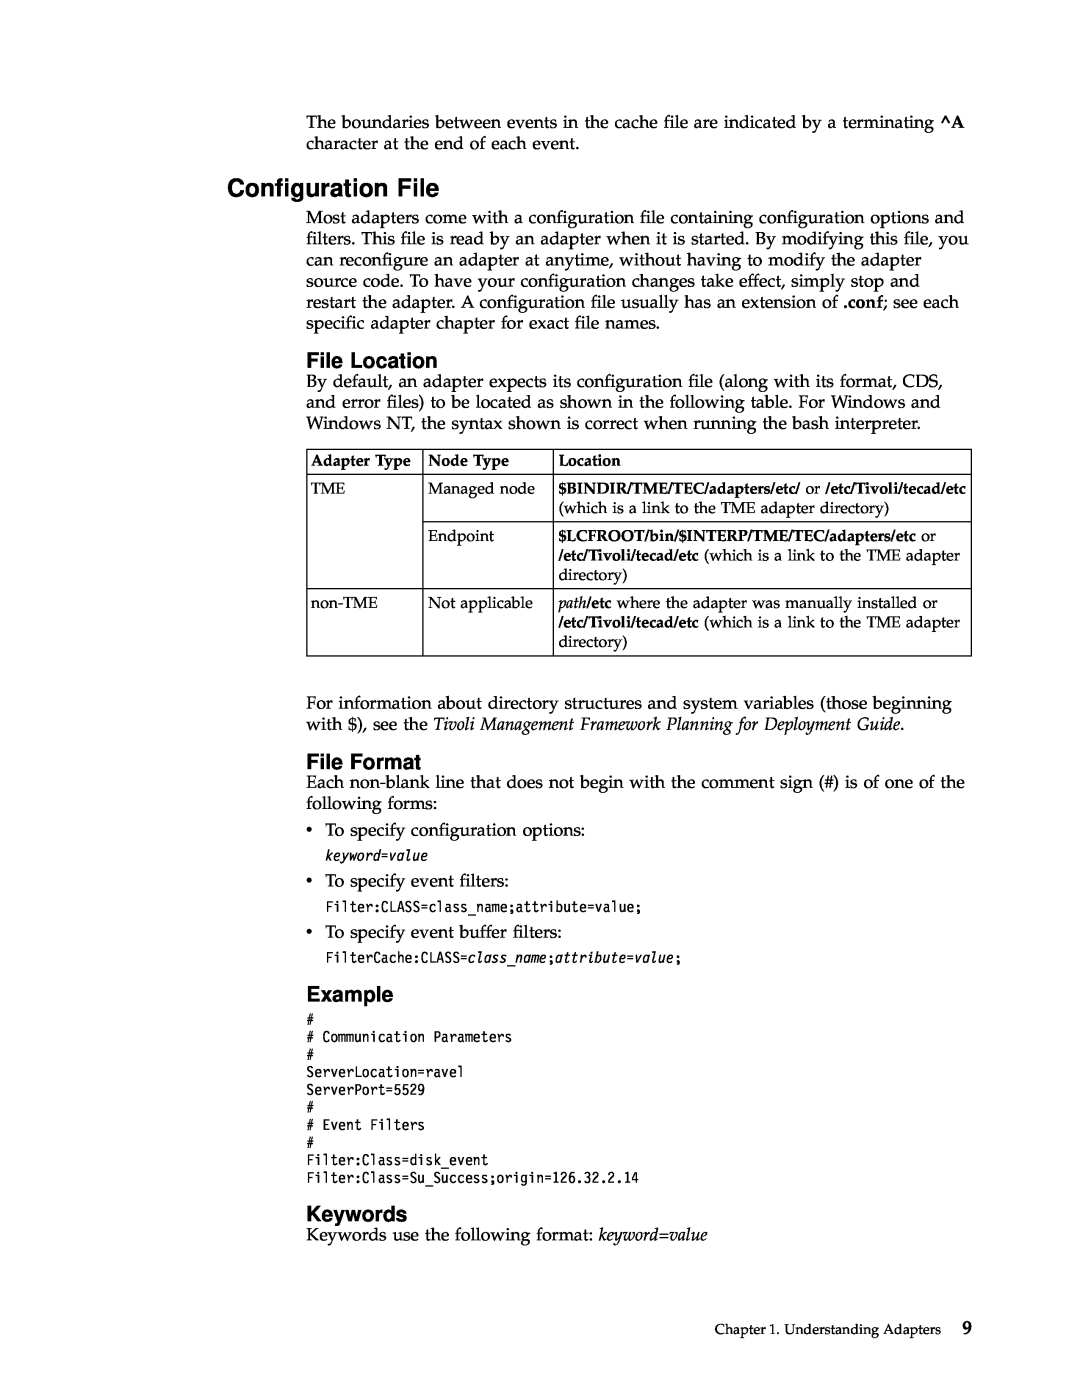 IBM Enterprise Console manual Configuration File, File Location, File Format, Example, Keywords 